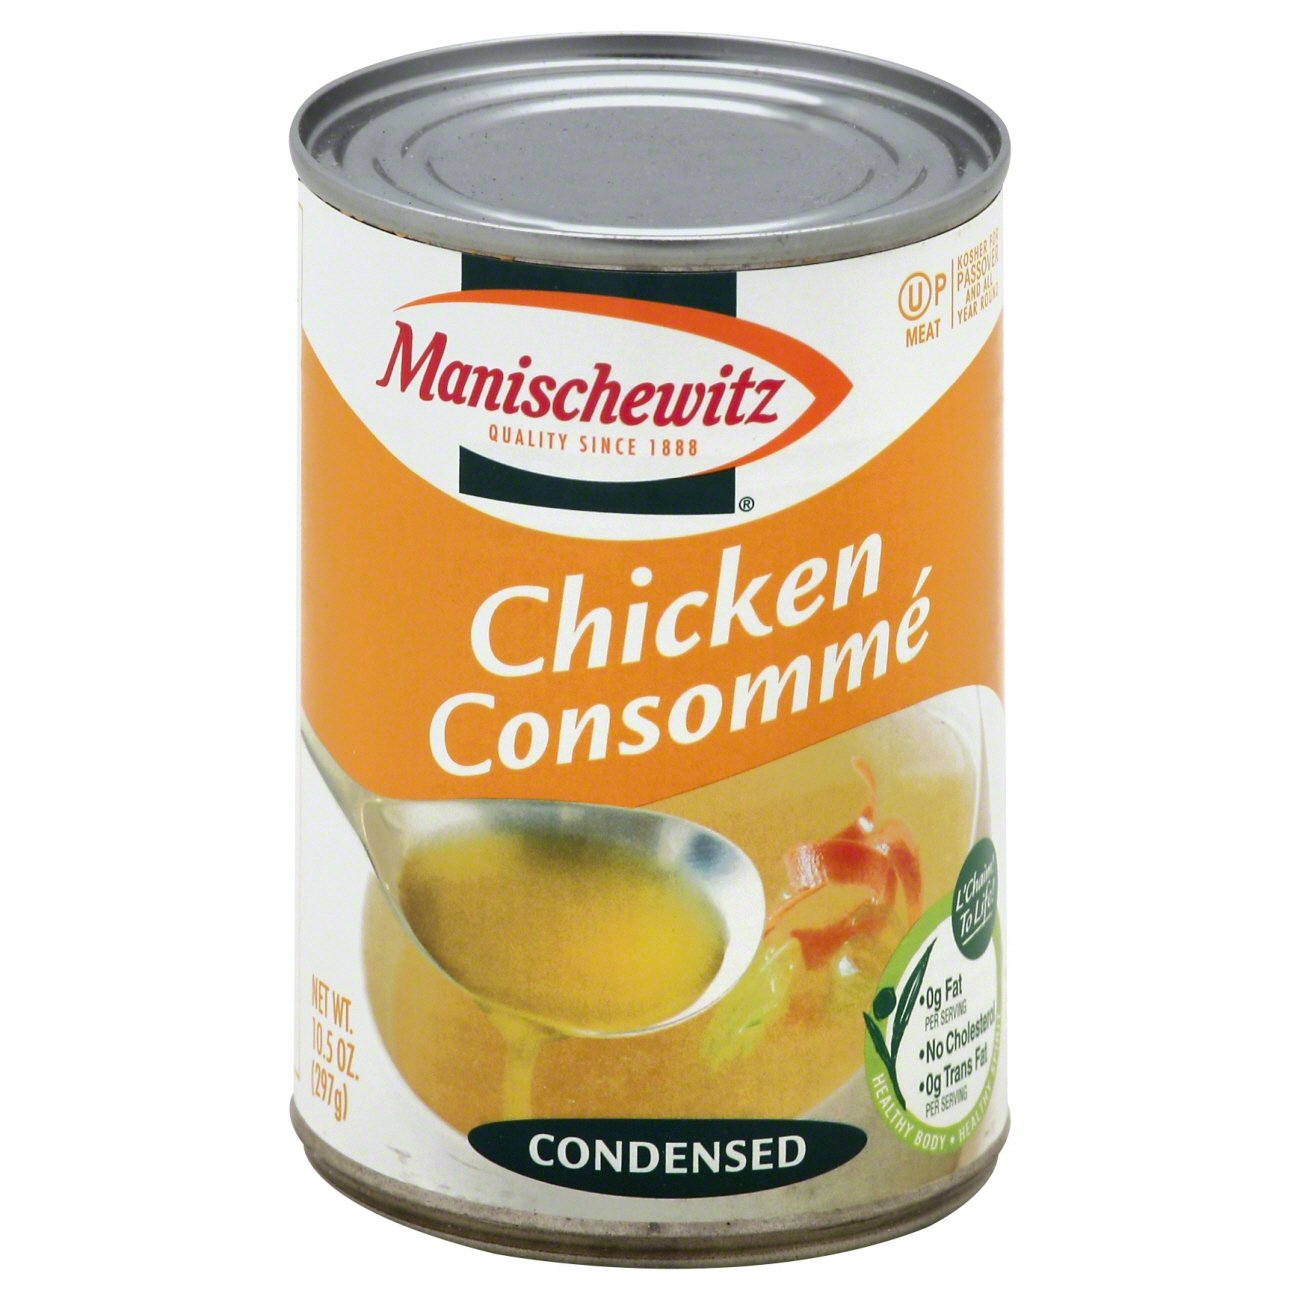 The Soup With - Manischewitz